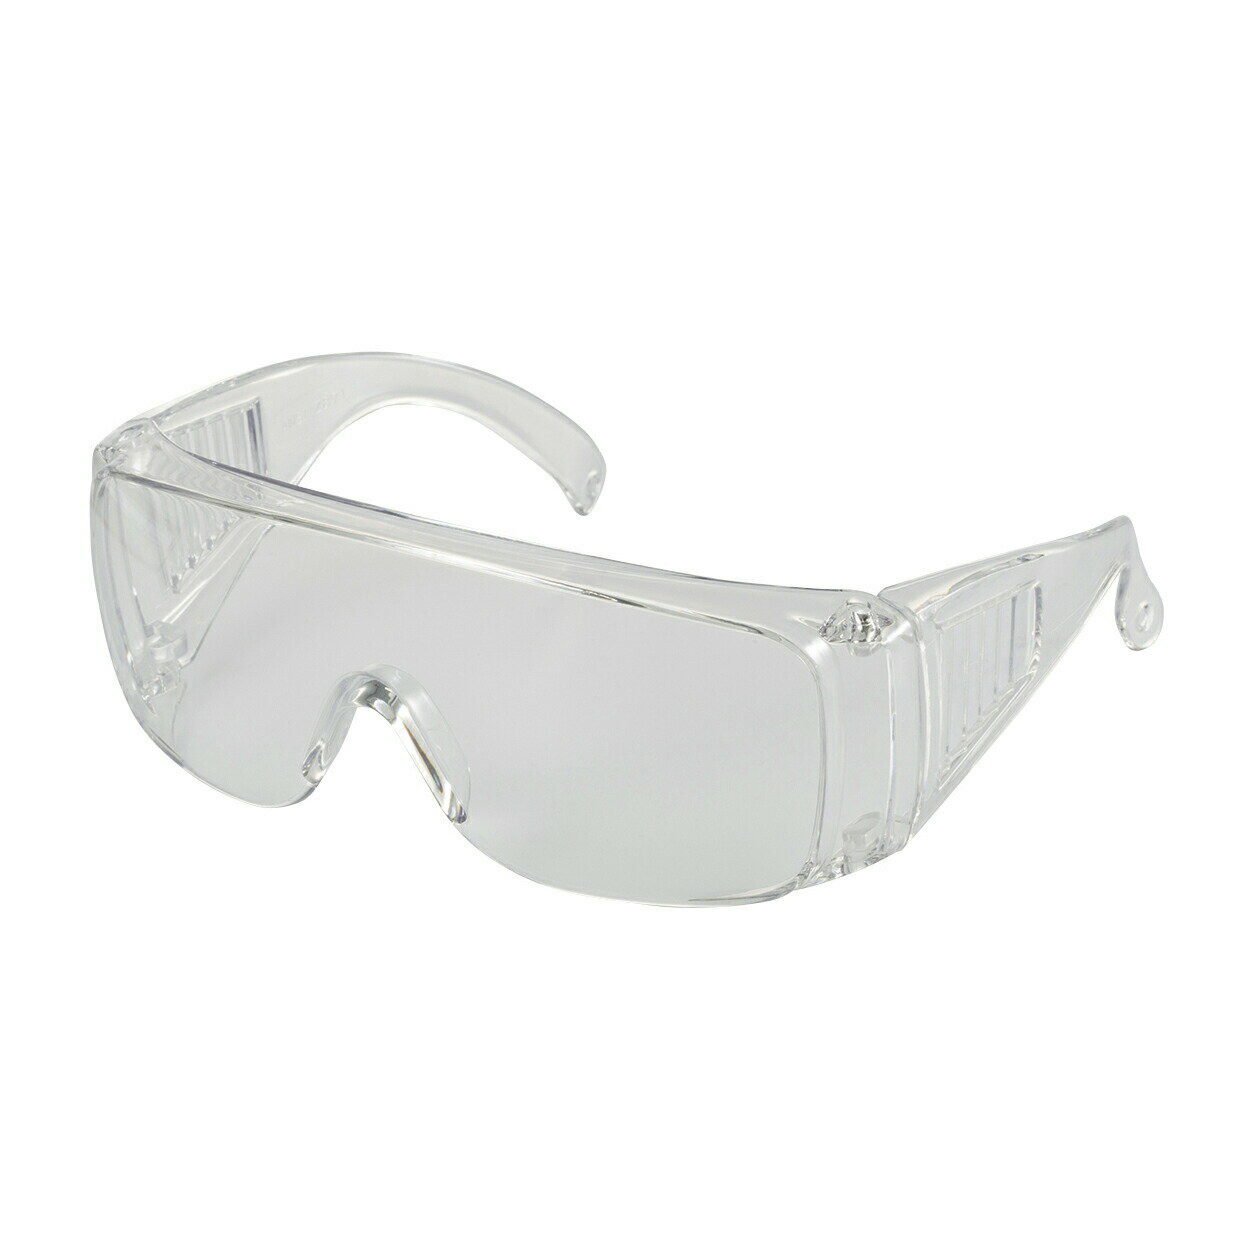 KINGFA 保護めがね KFS-GC-301-AS 保護メガネ 25-3260-00 キンファ マツヨシ アイガード 眼鏡 感染対策 飛沫防止 曇りにくい 病院 医療 看護 クリニック